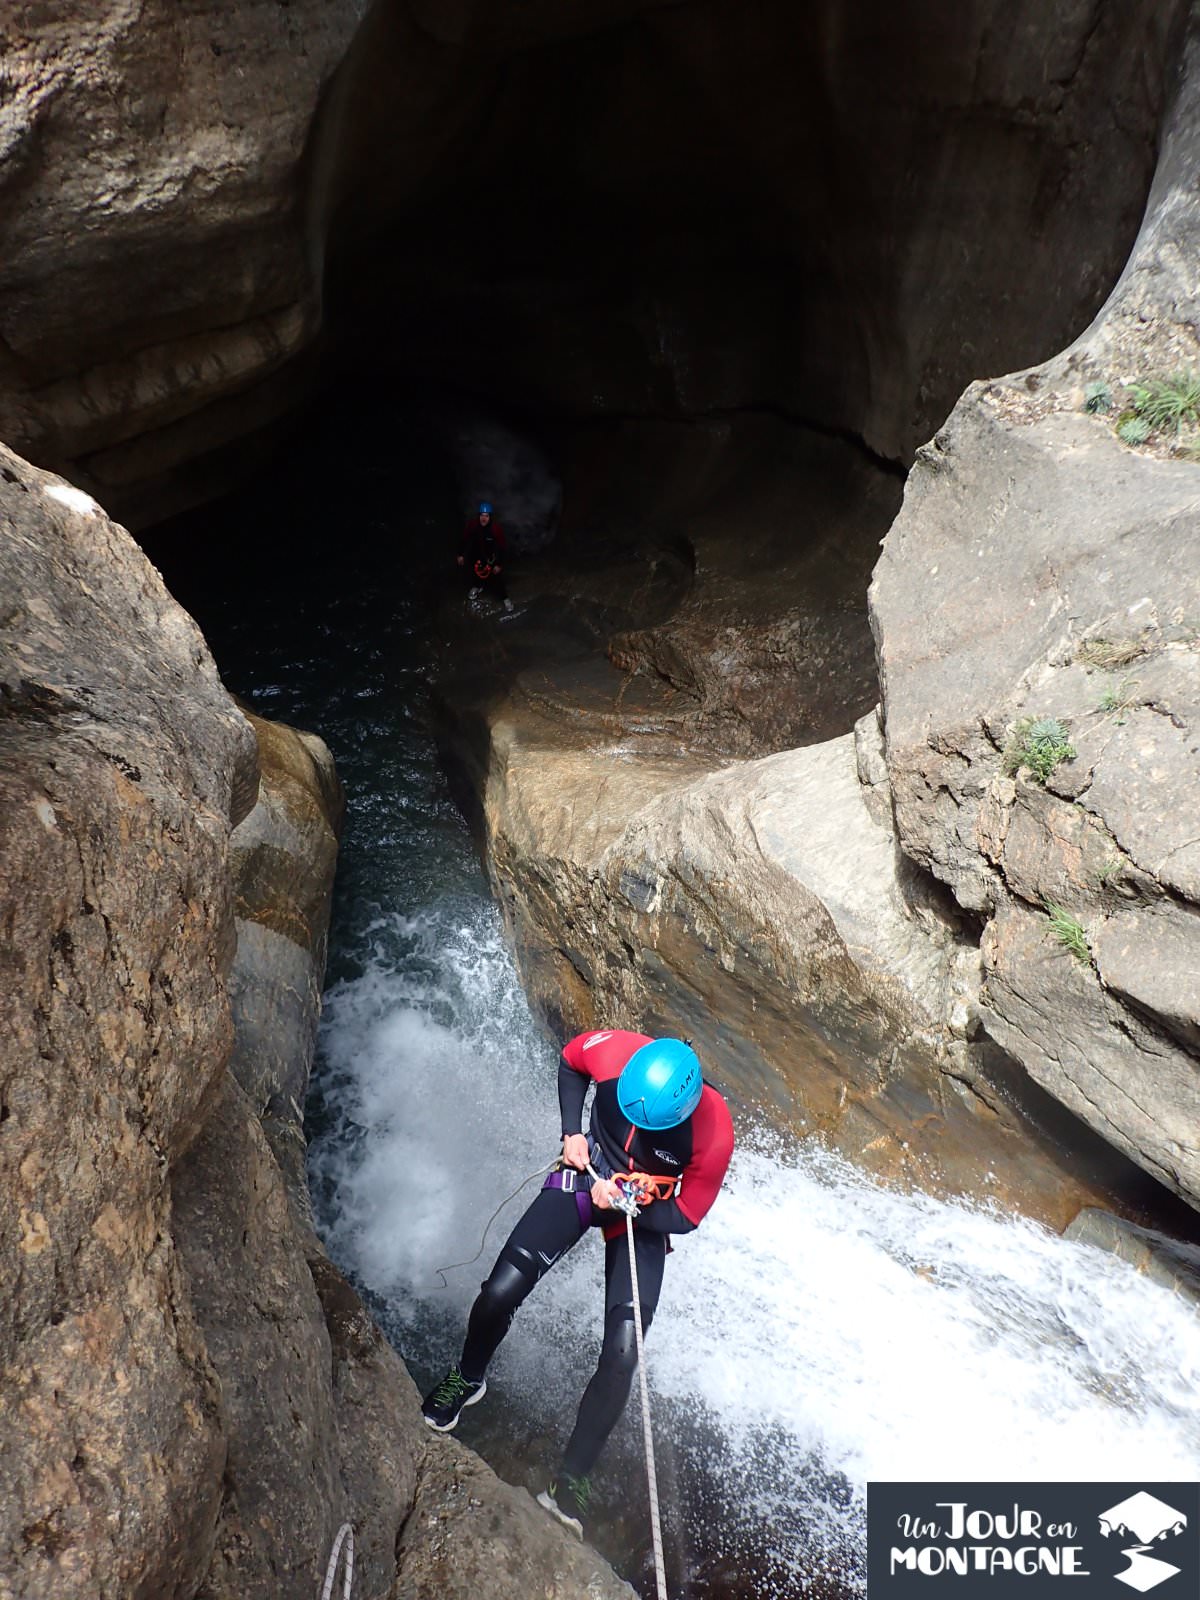 abseilen in een waterader - canyoning gorgol